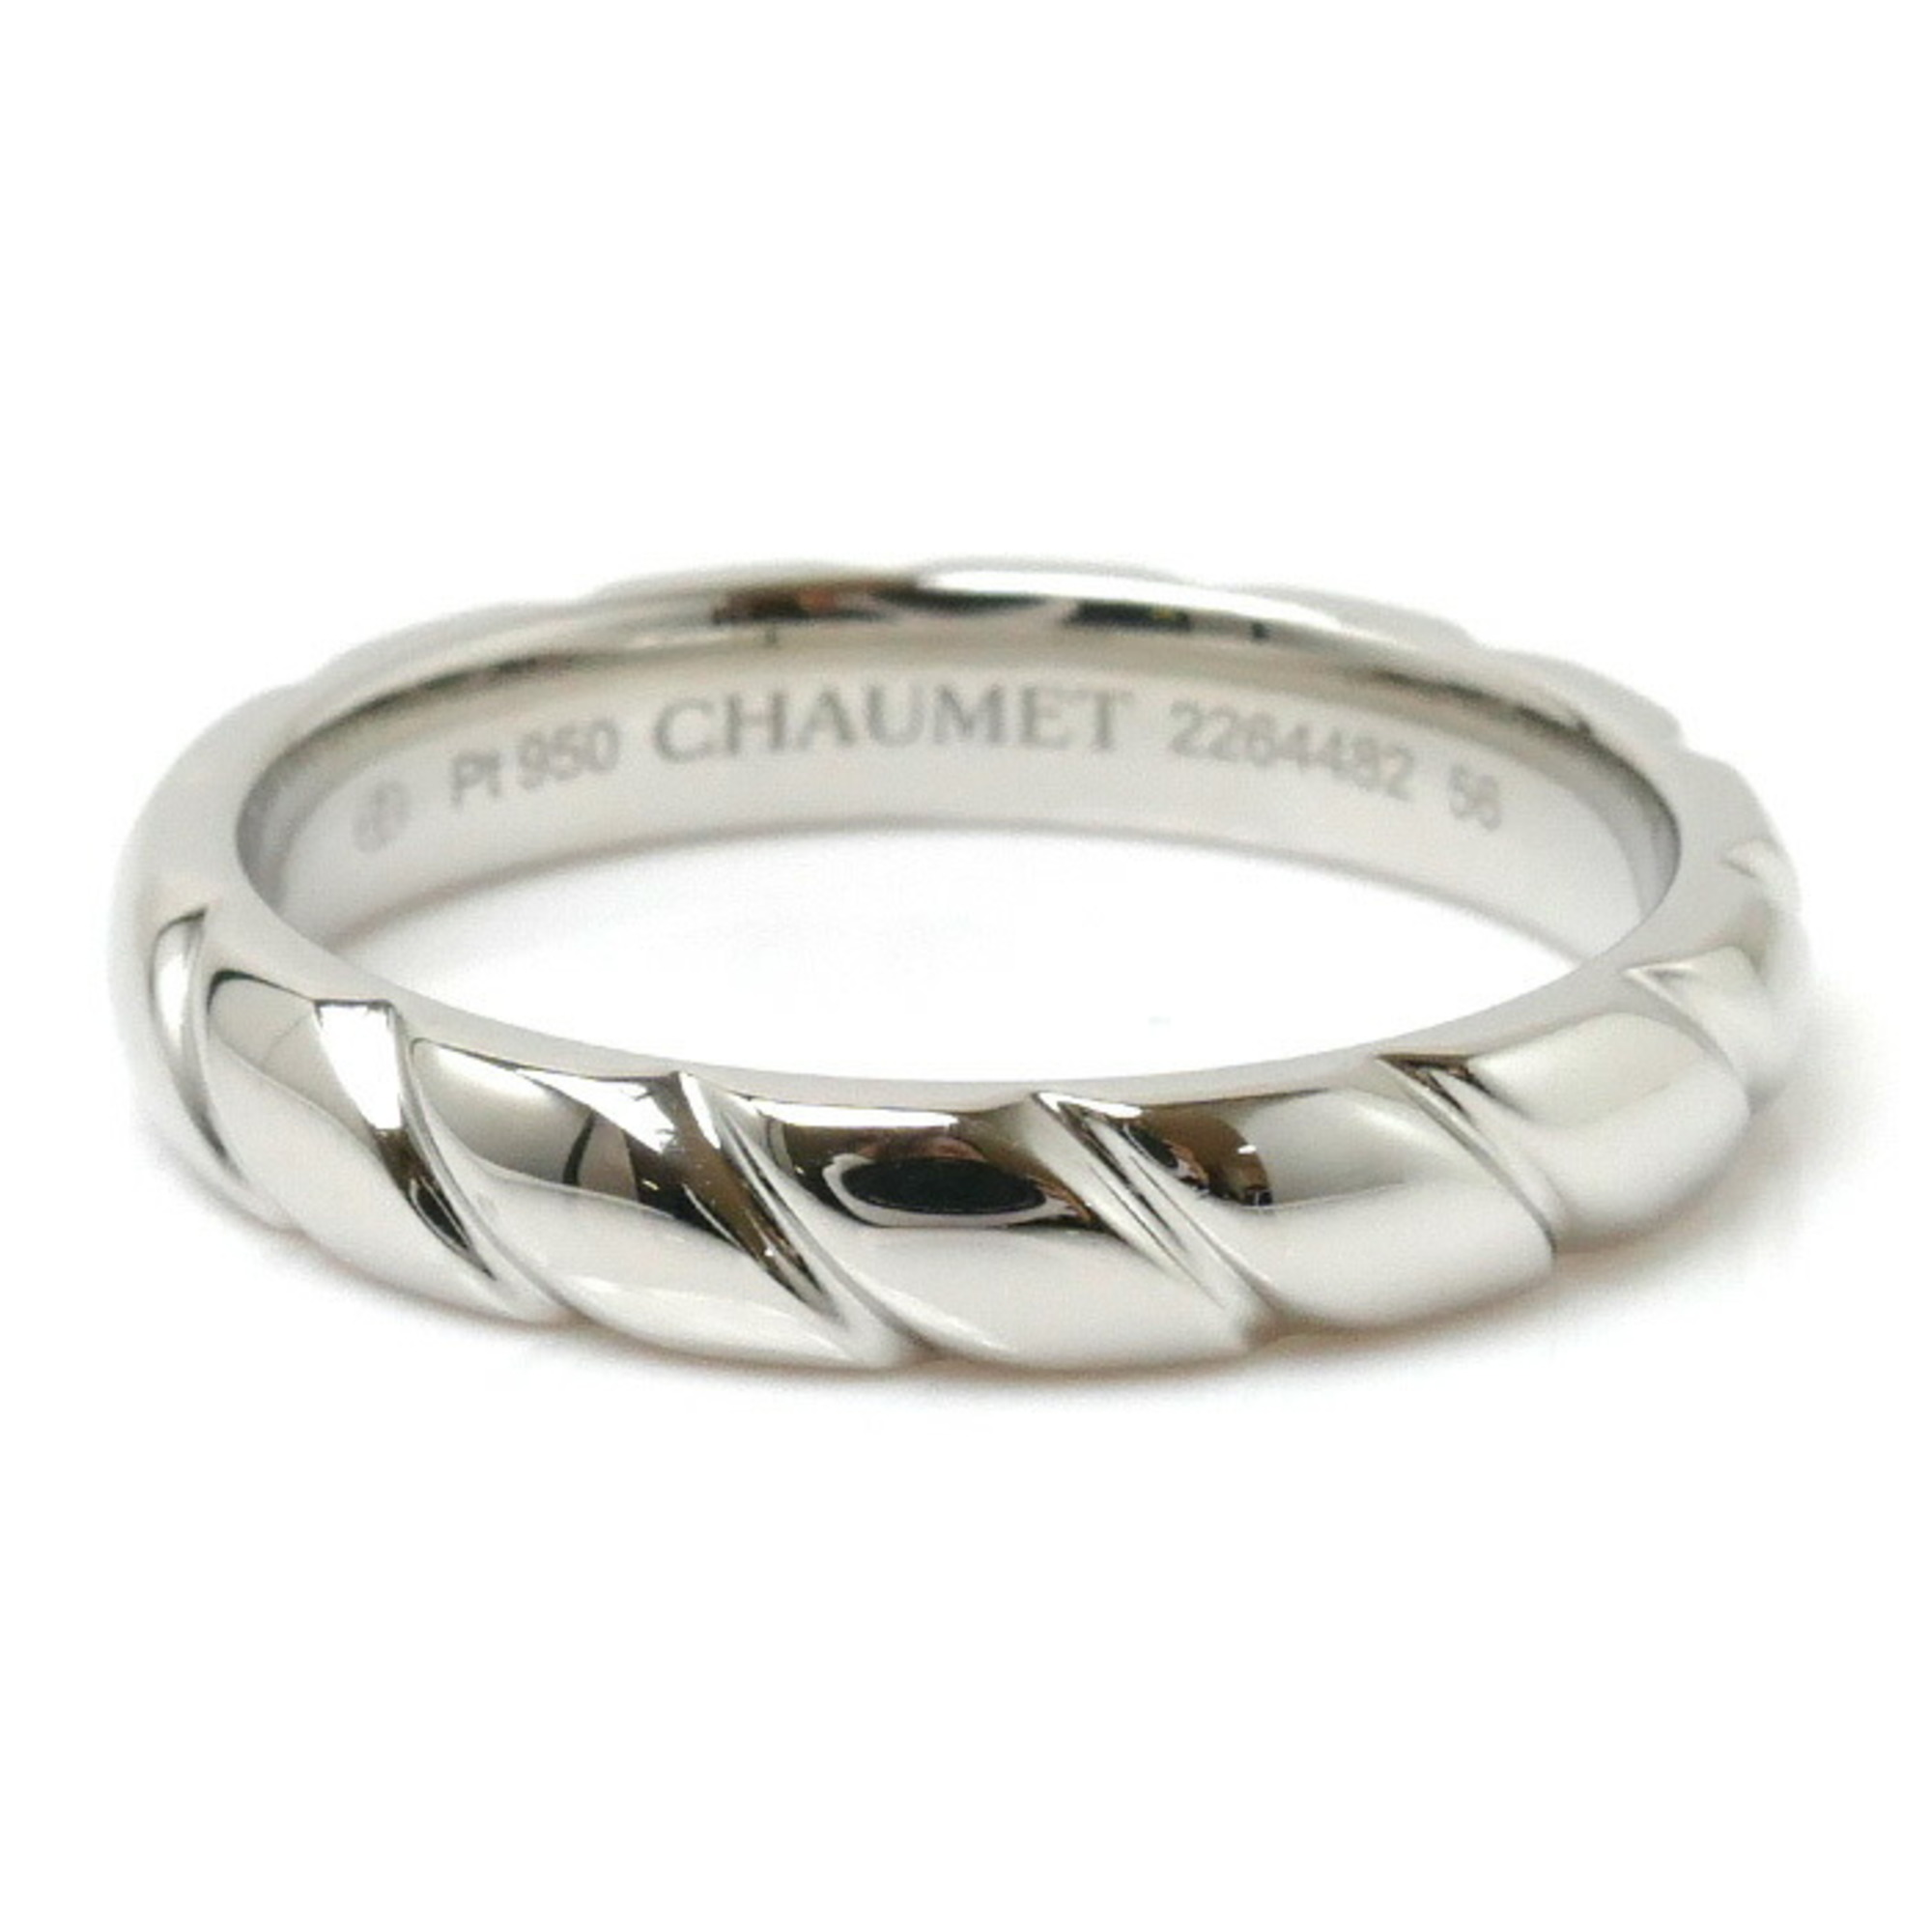 Chaumet Pt950 Platinum Torsade Ring 095903-056 7.2g Women's